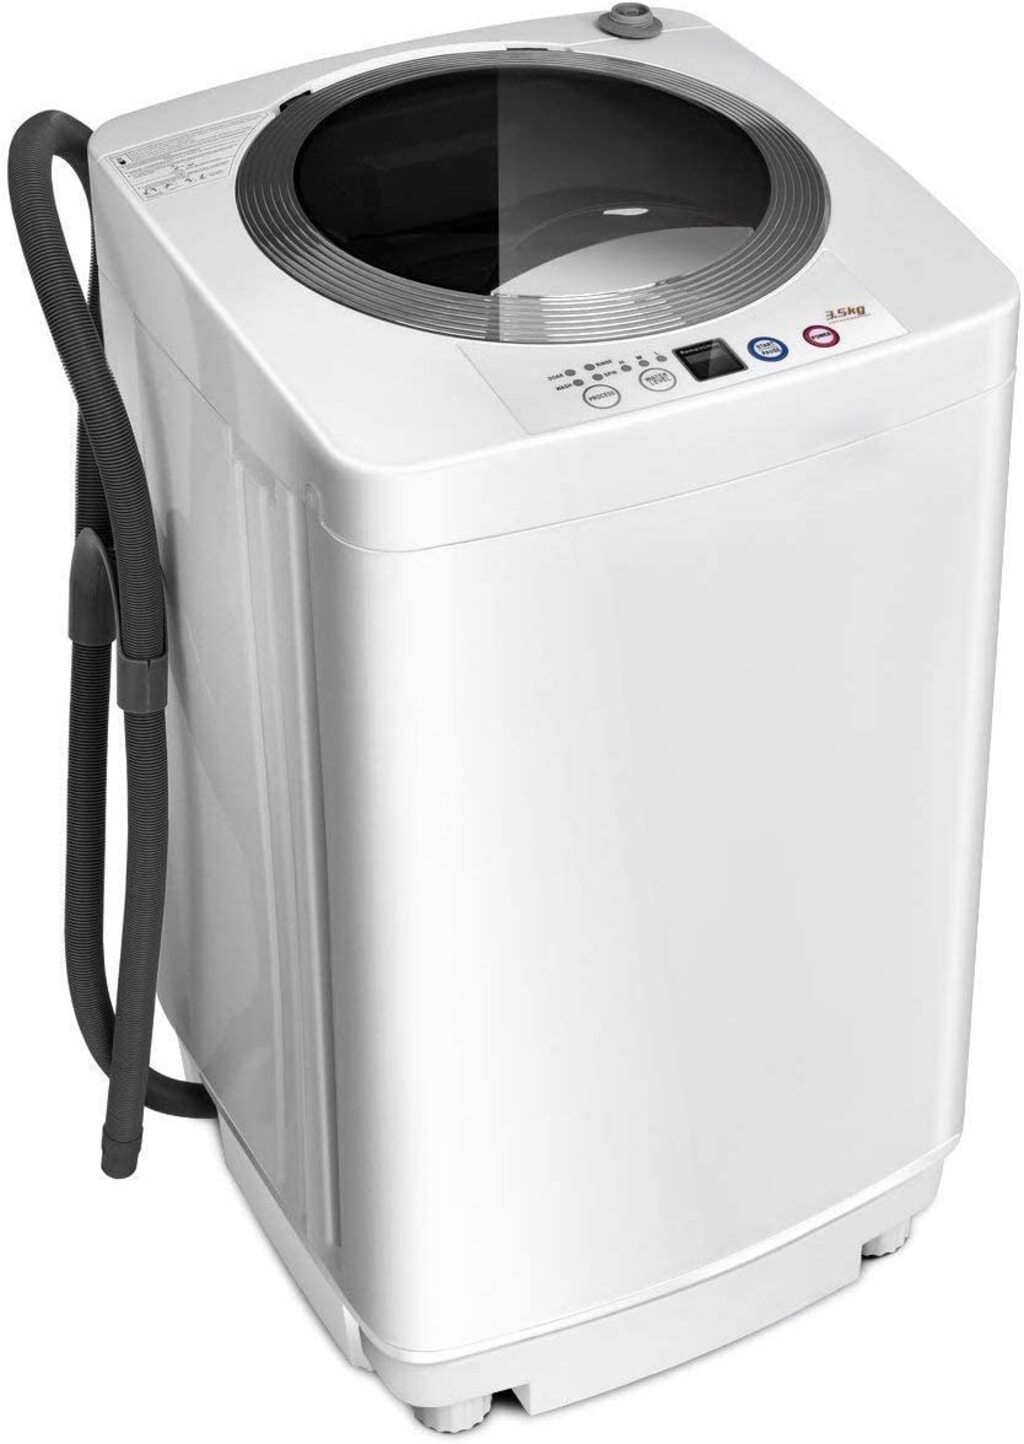 Gentex Portable Washing Machine